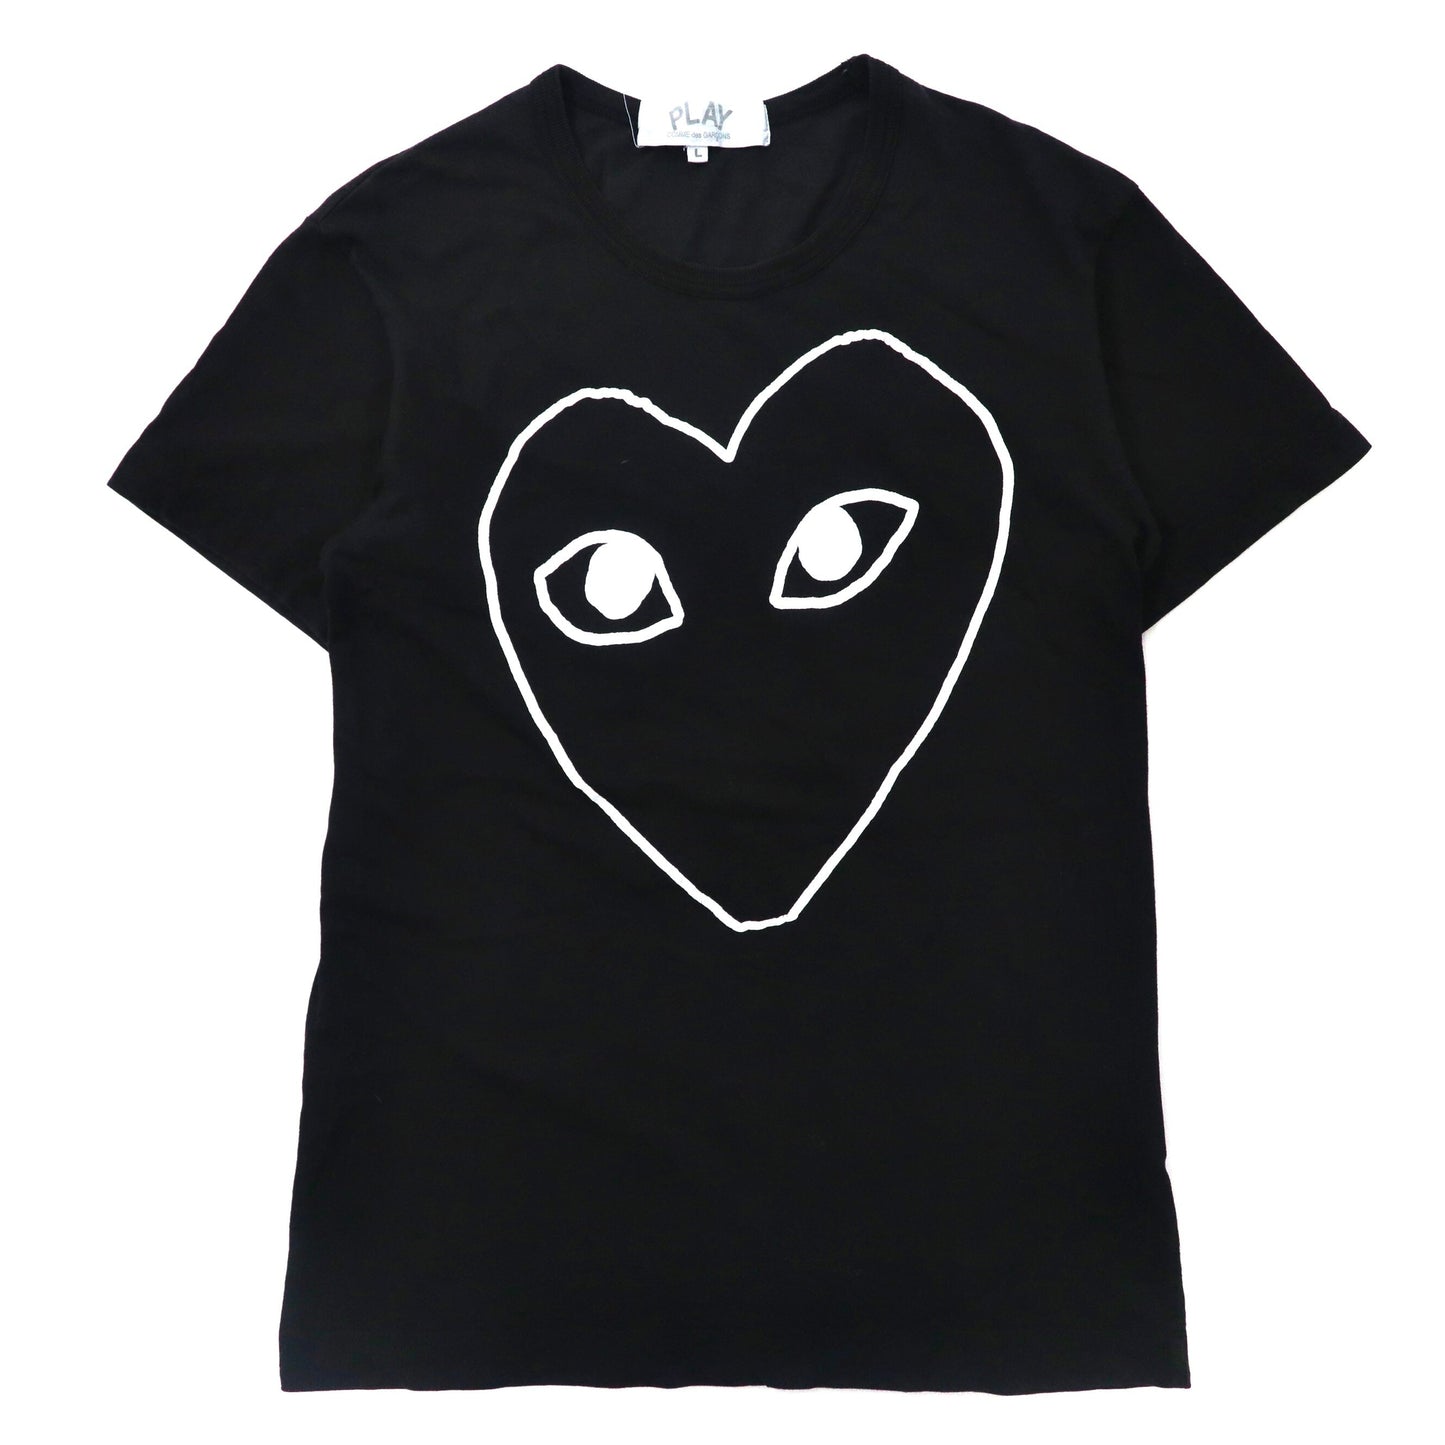 PLAY COMME des GARCONS プリント Tシャツ L ブラック コットン ロゴ ハート 日本製